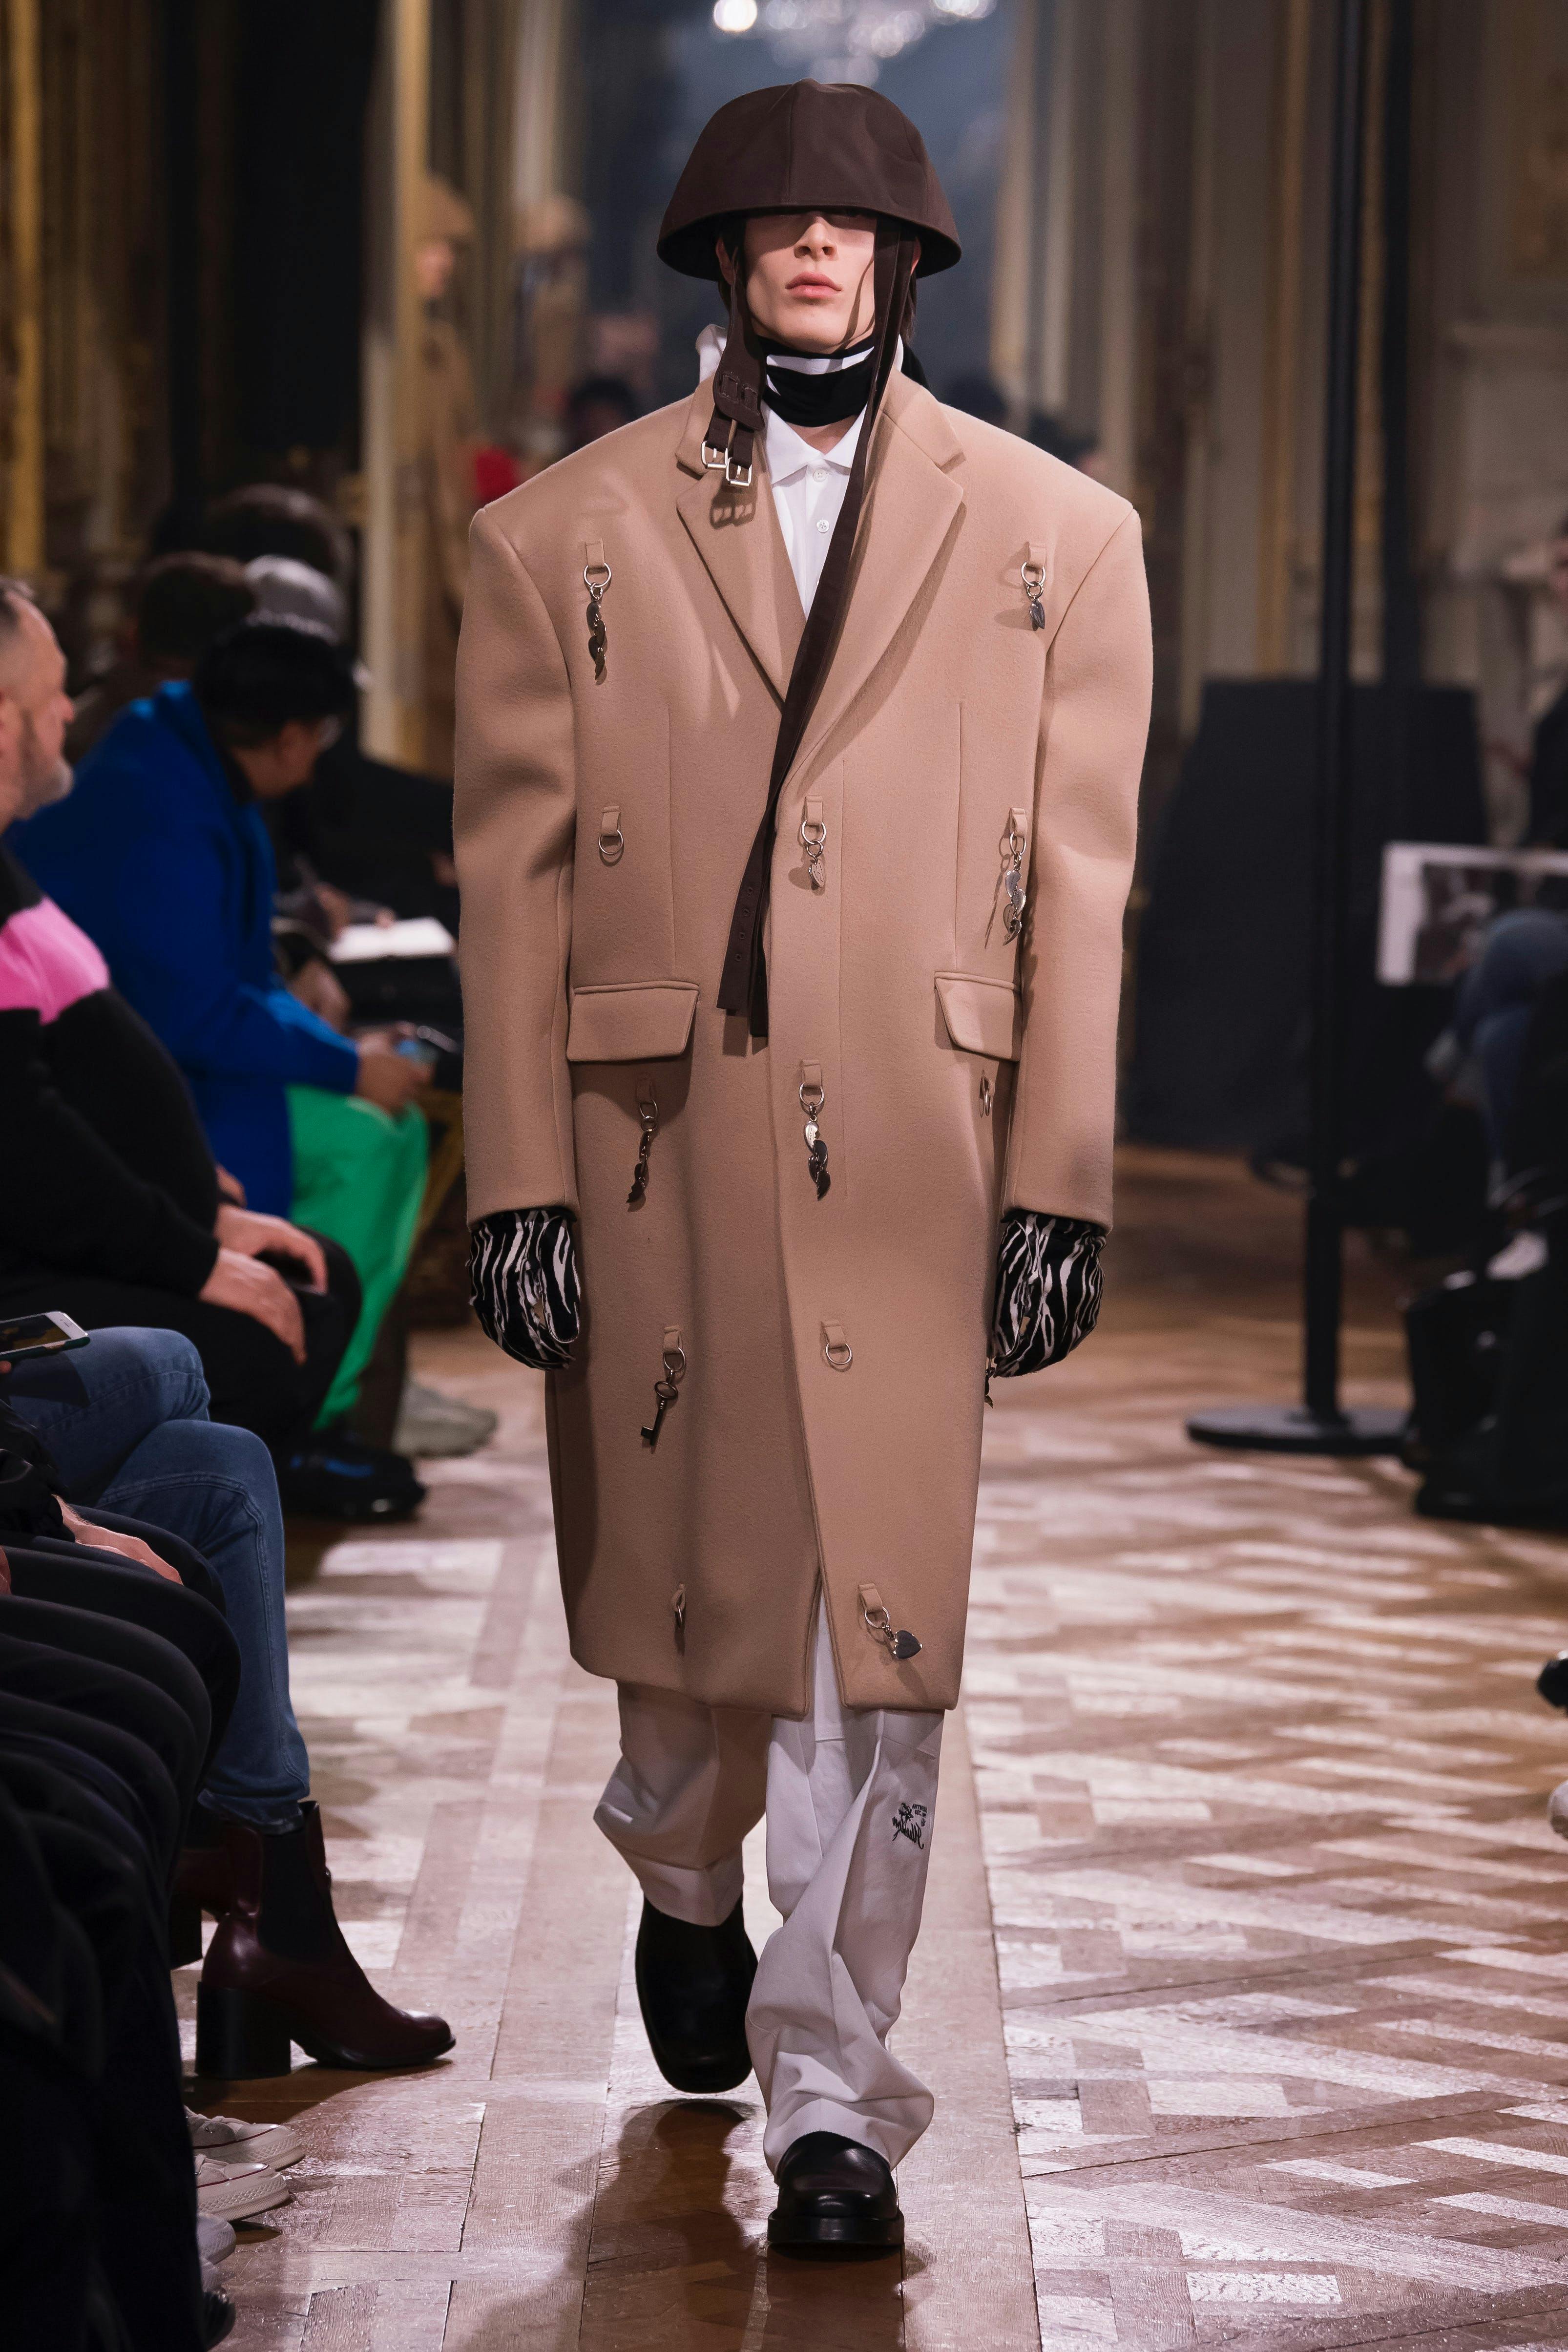 clothing apparel person human overcoat coat helmet suit